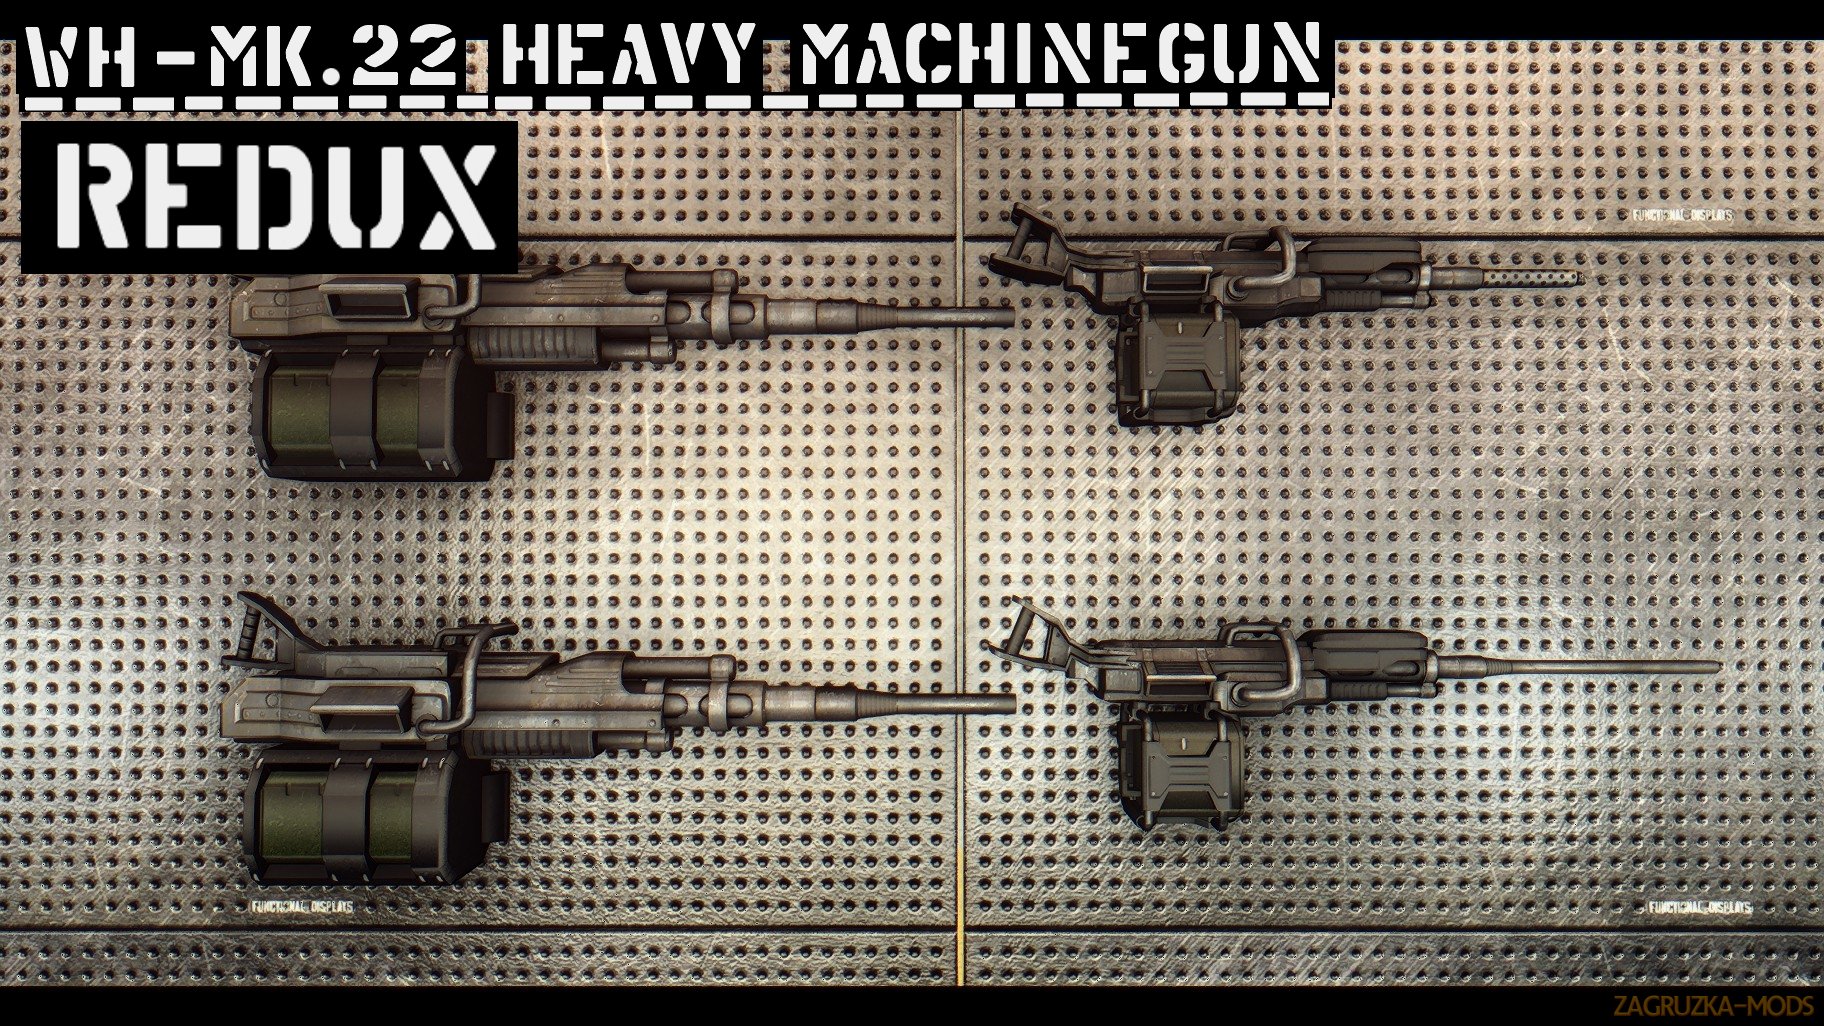 WH-Mk.22 Heavy Machinegun REDUX v1.0 for Fallout 4